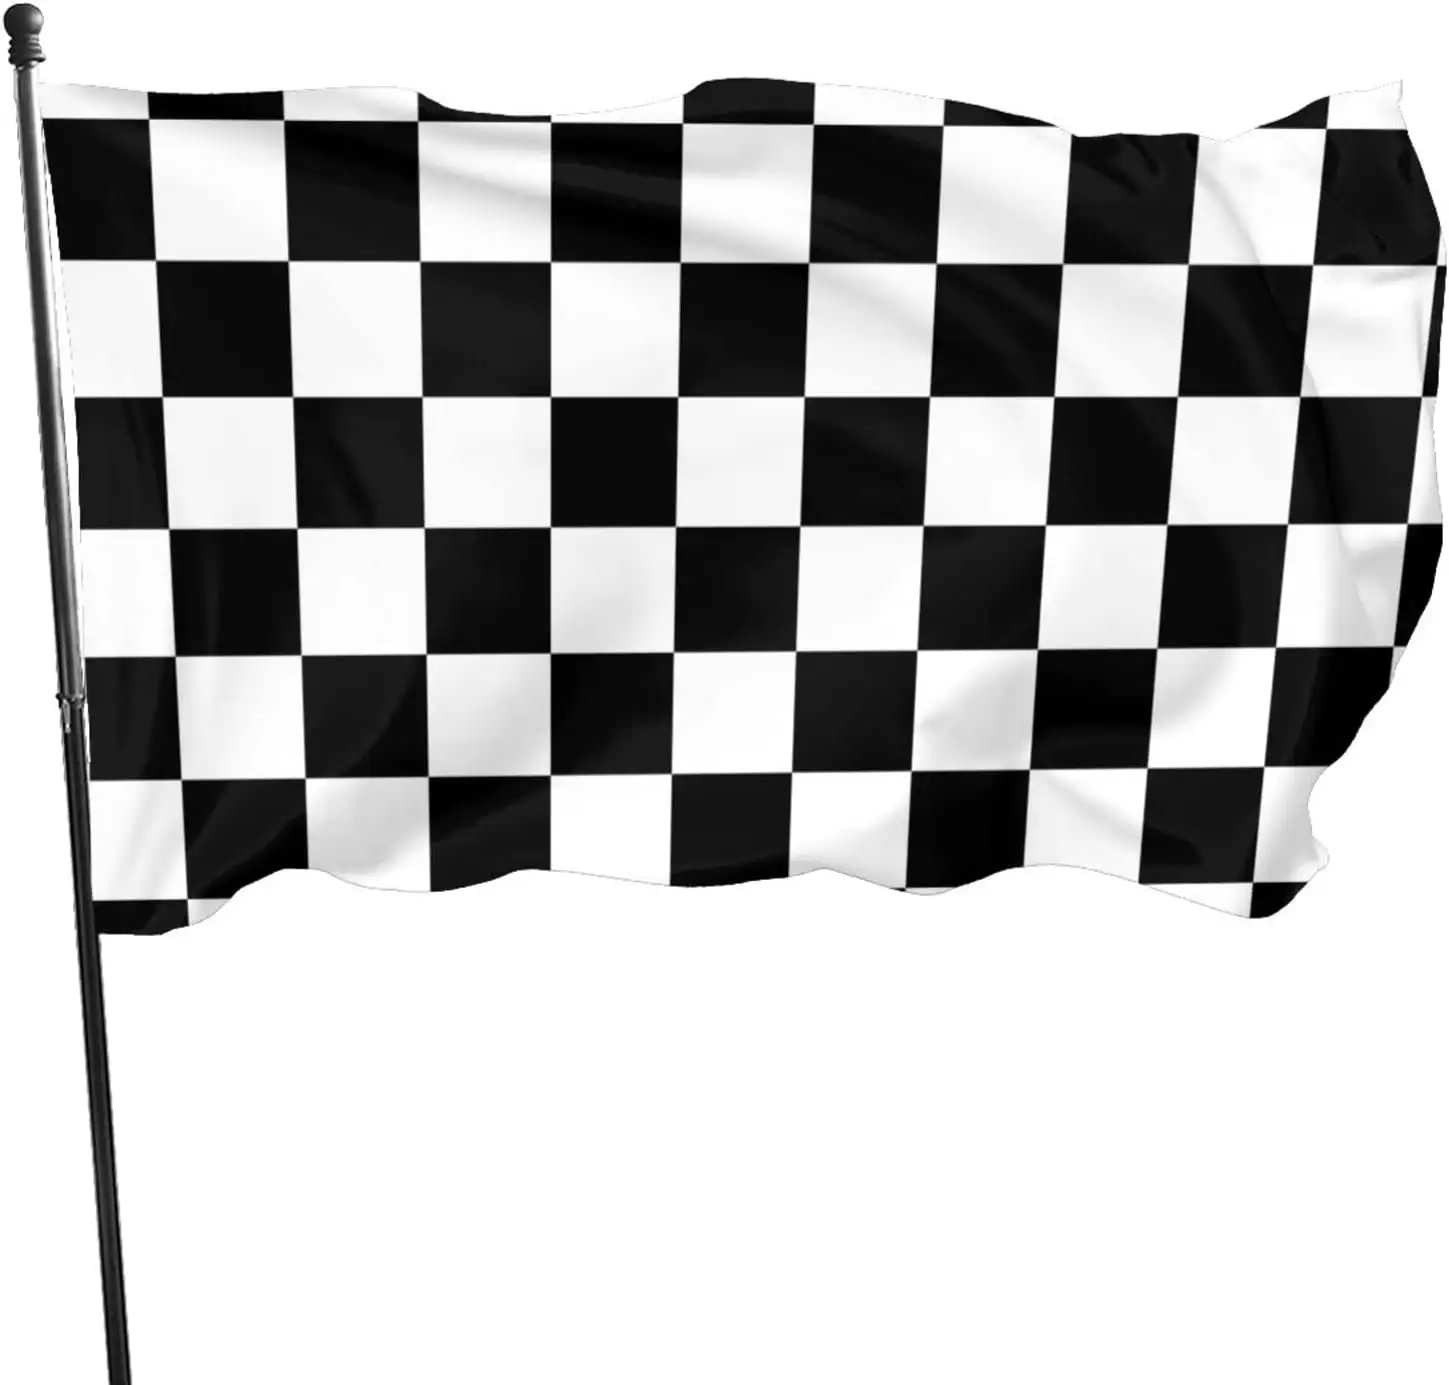 3x5 फीट काला सफेद रेस चेकआउट फ्लैग बैनर विज्ञापन बैनर बैनर